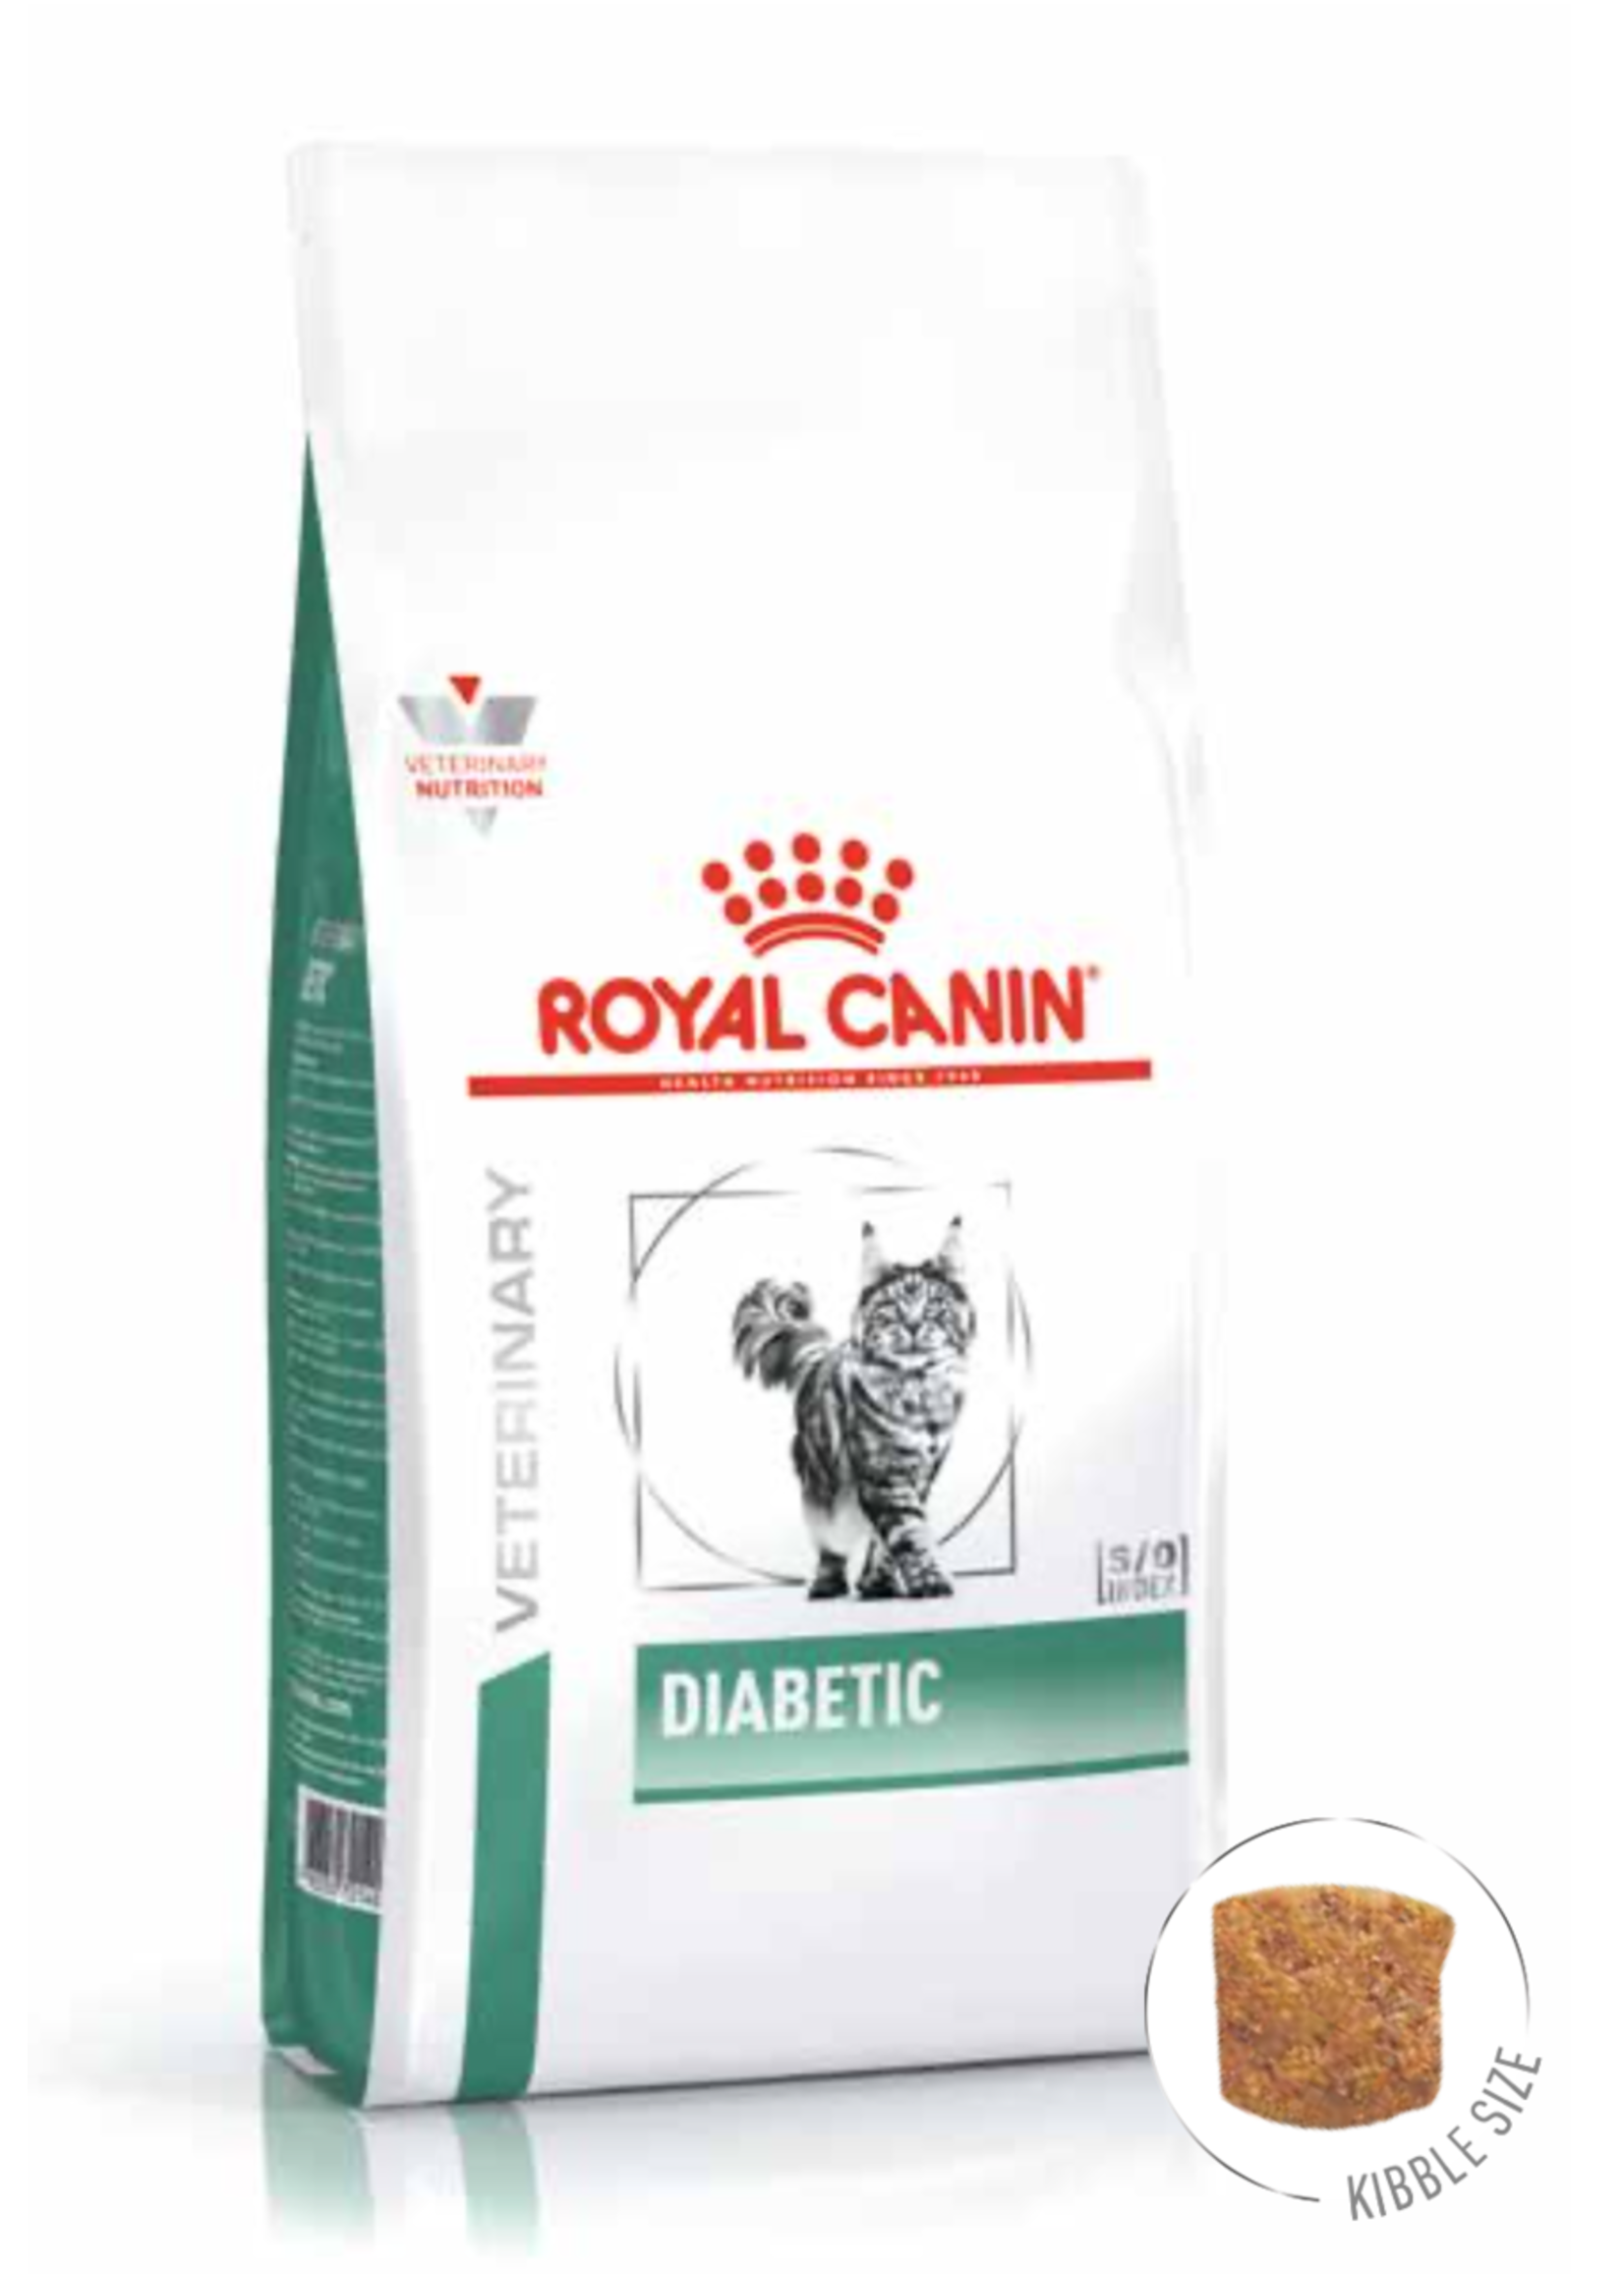 Royal Canin Royal Canin Vdiet Diabetic Katze 1,5kg